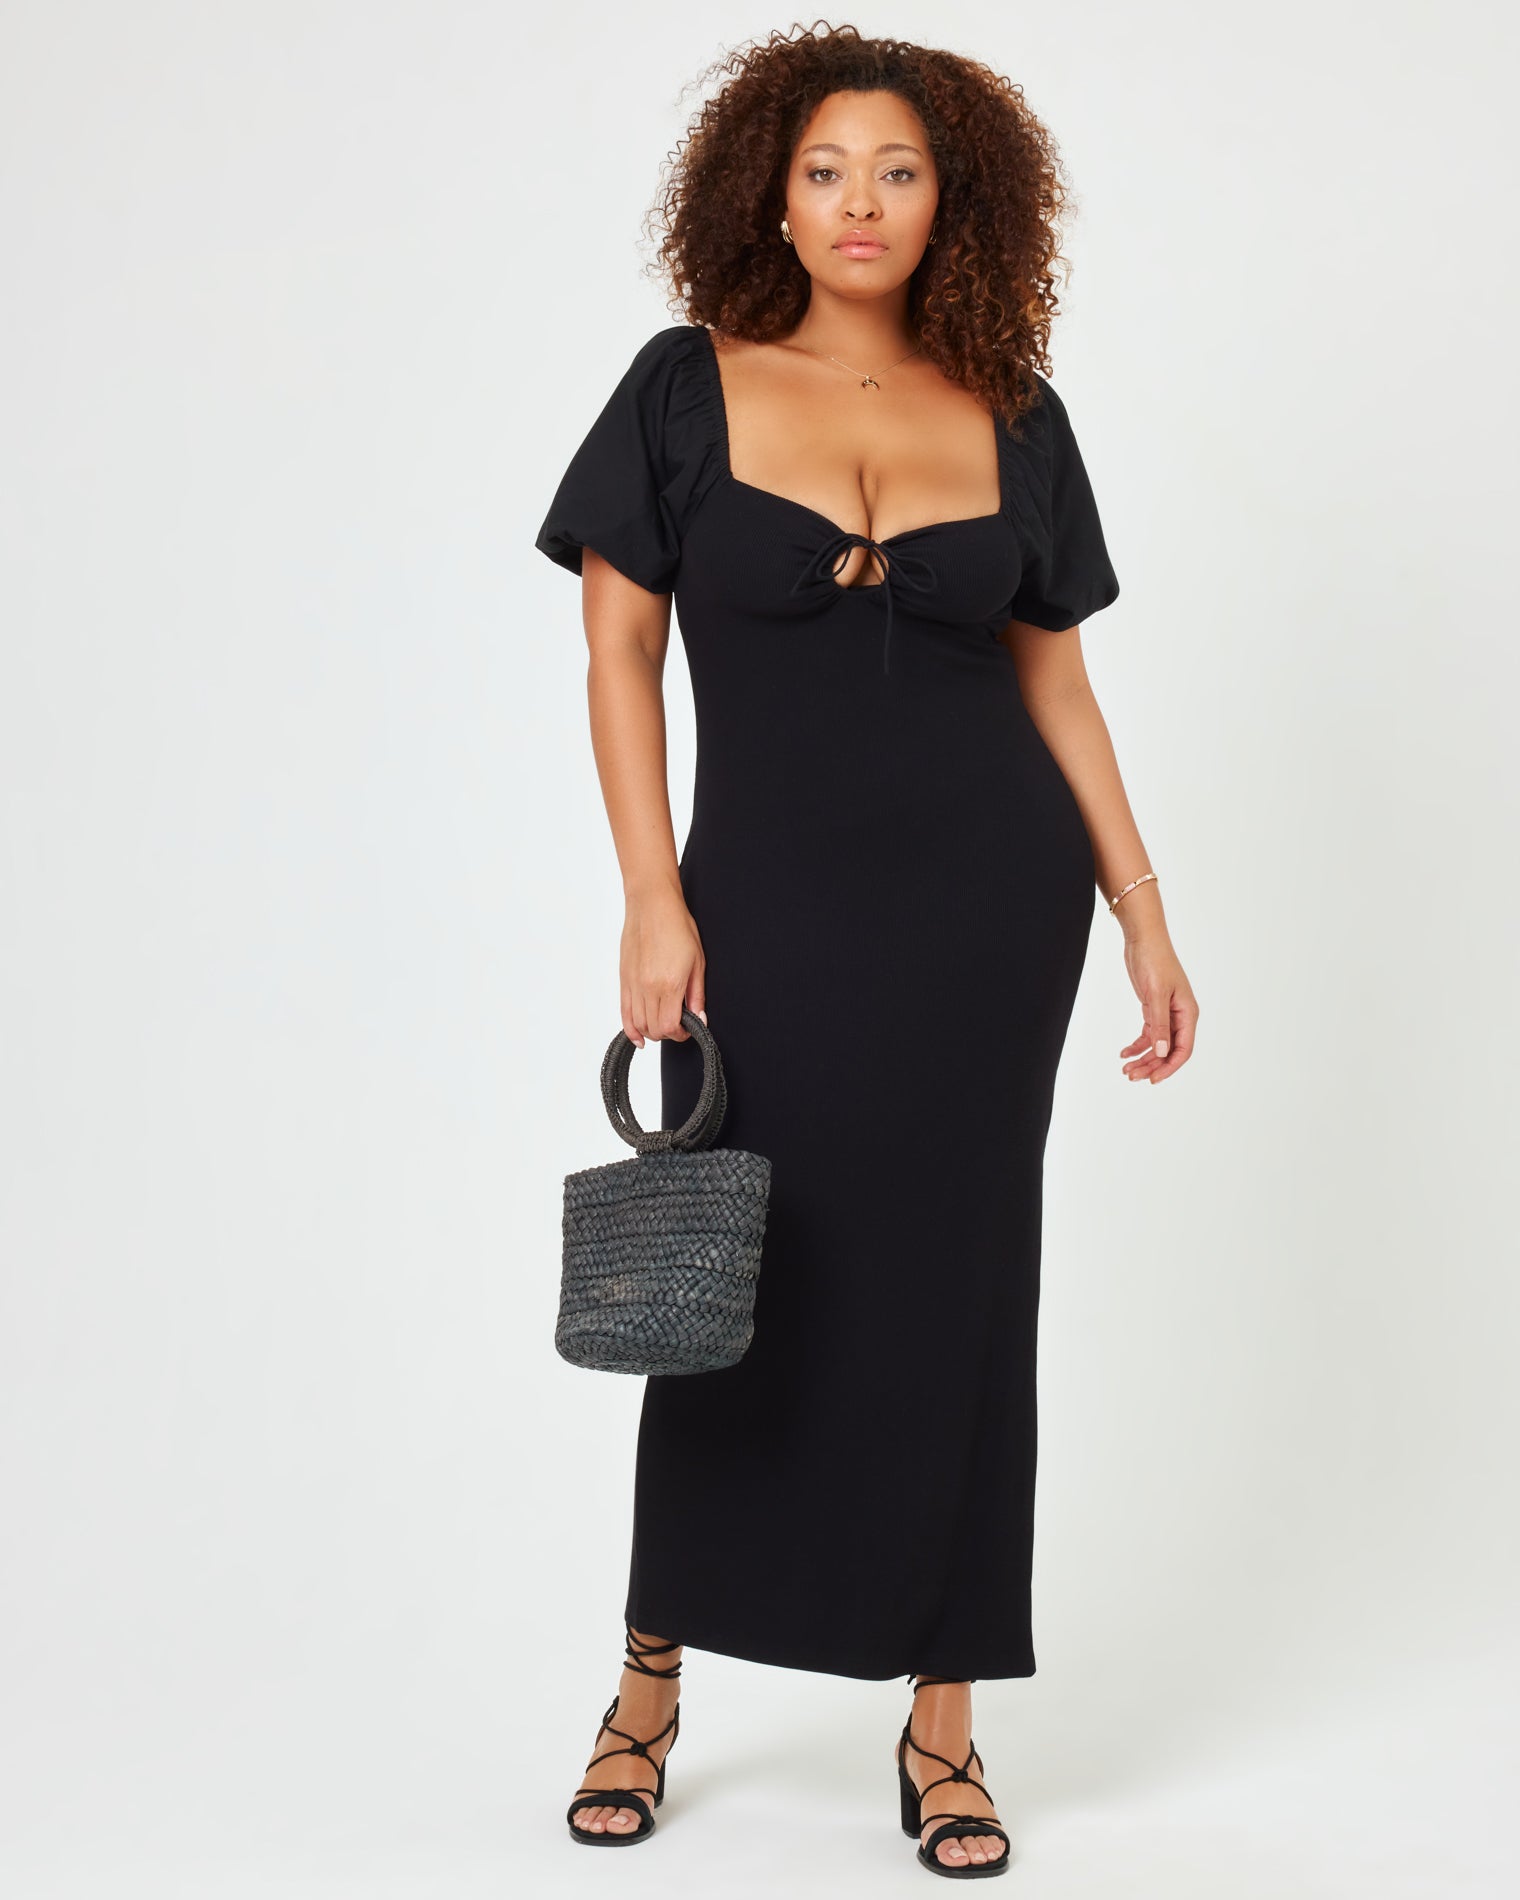 Chelsea Dress - Black Black | Model: Amber (size: XL)